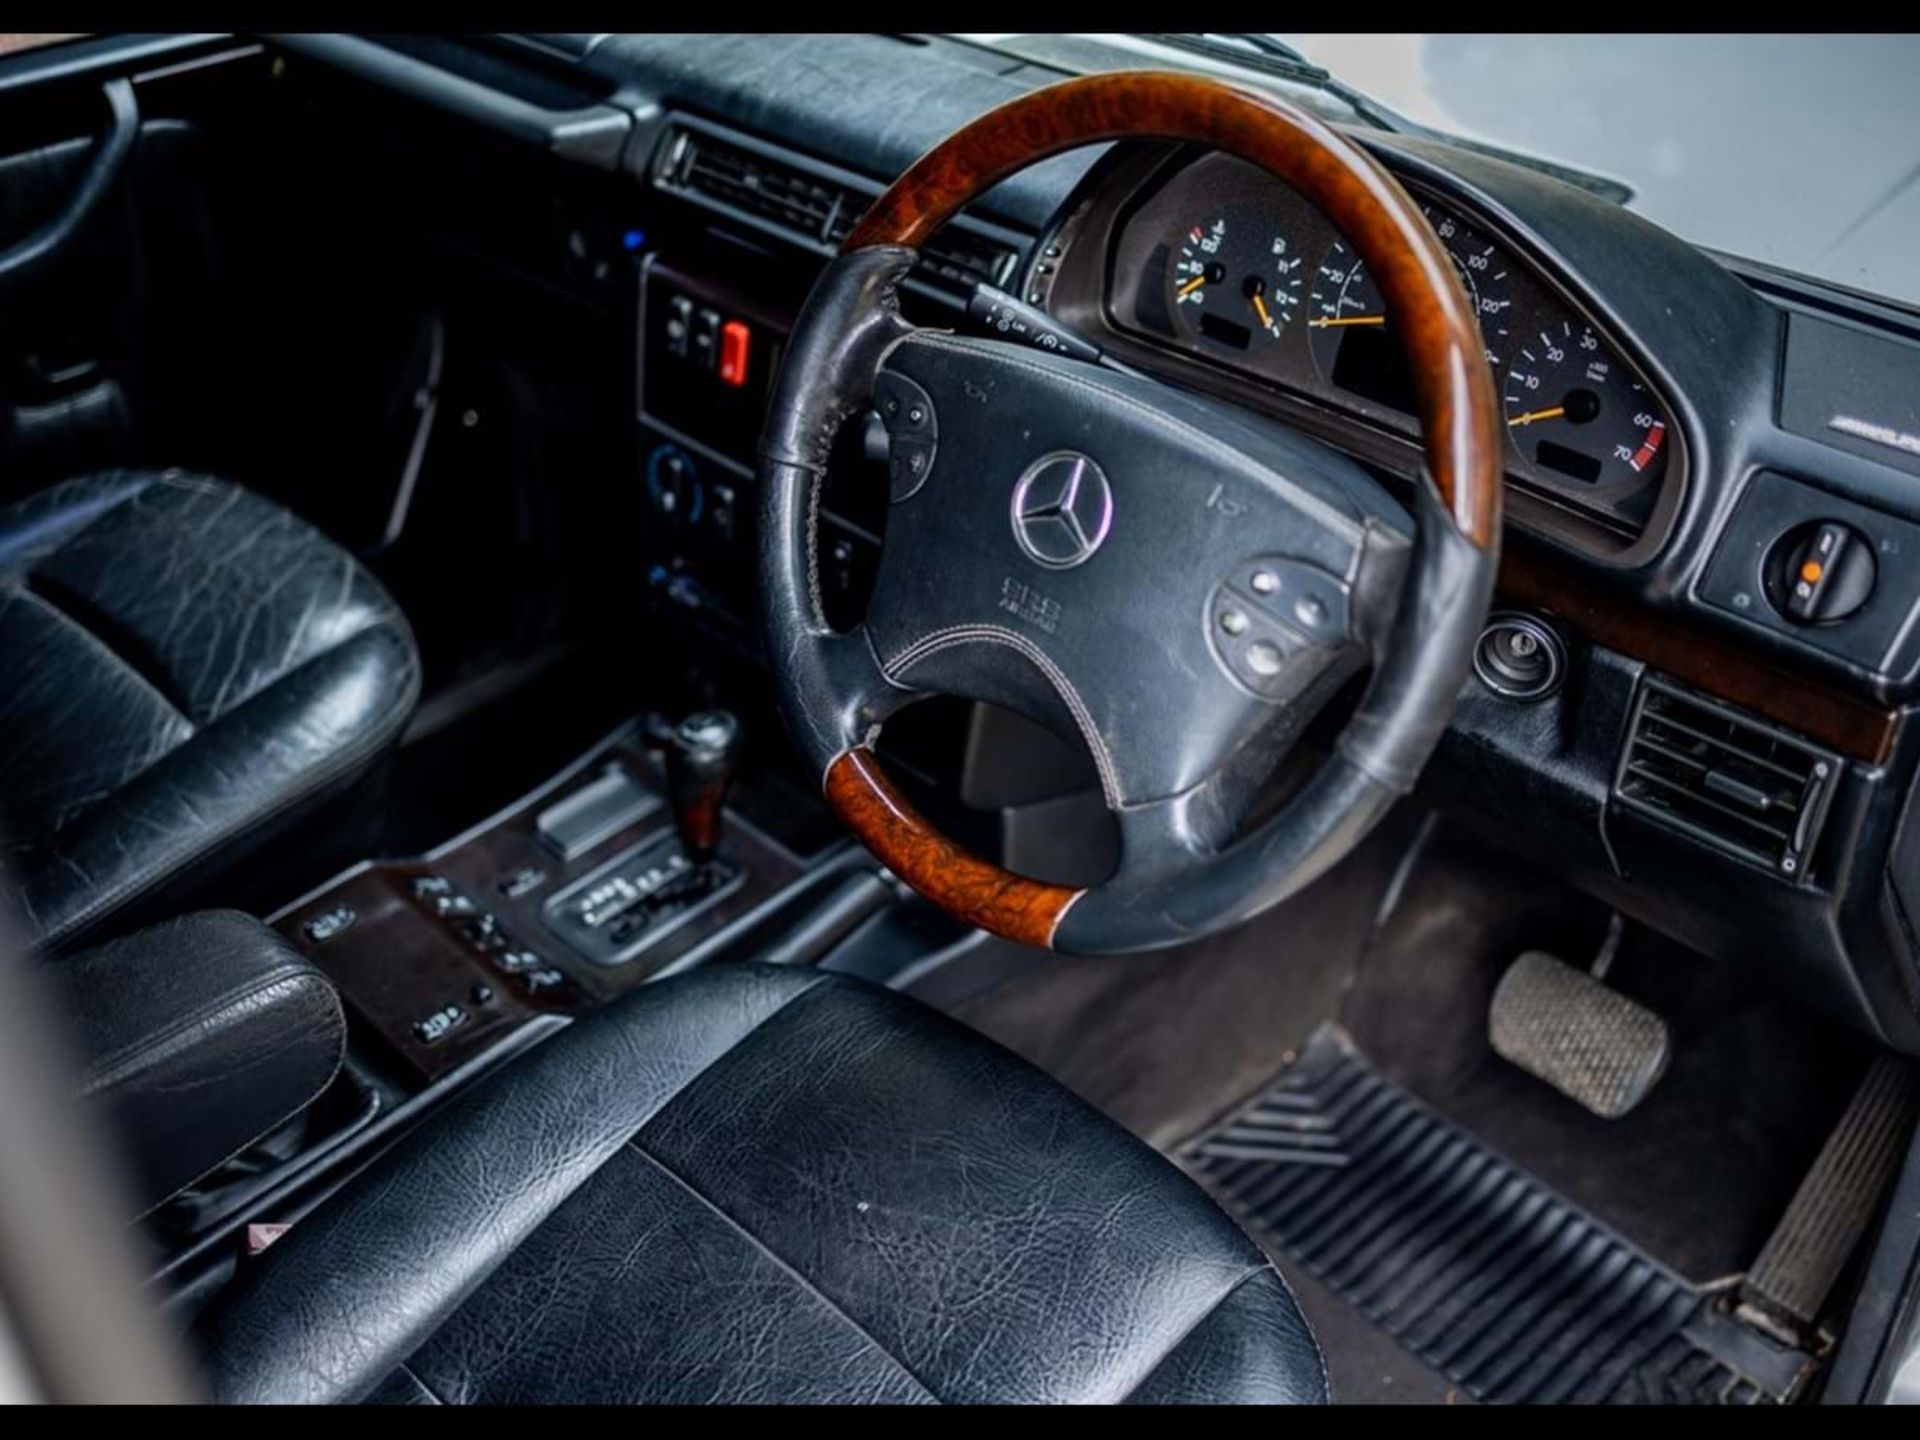 2000 Mercedes-Benz G500 ex-Eric Clapton - Image 4 of 19